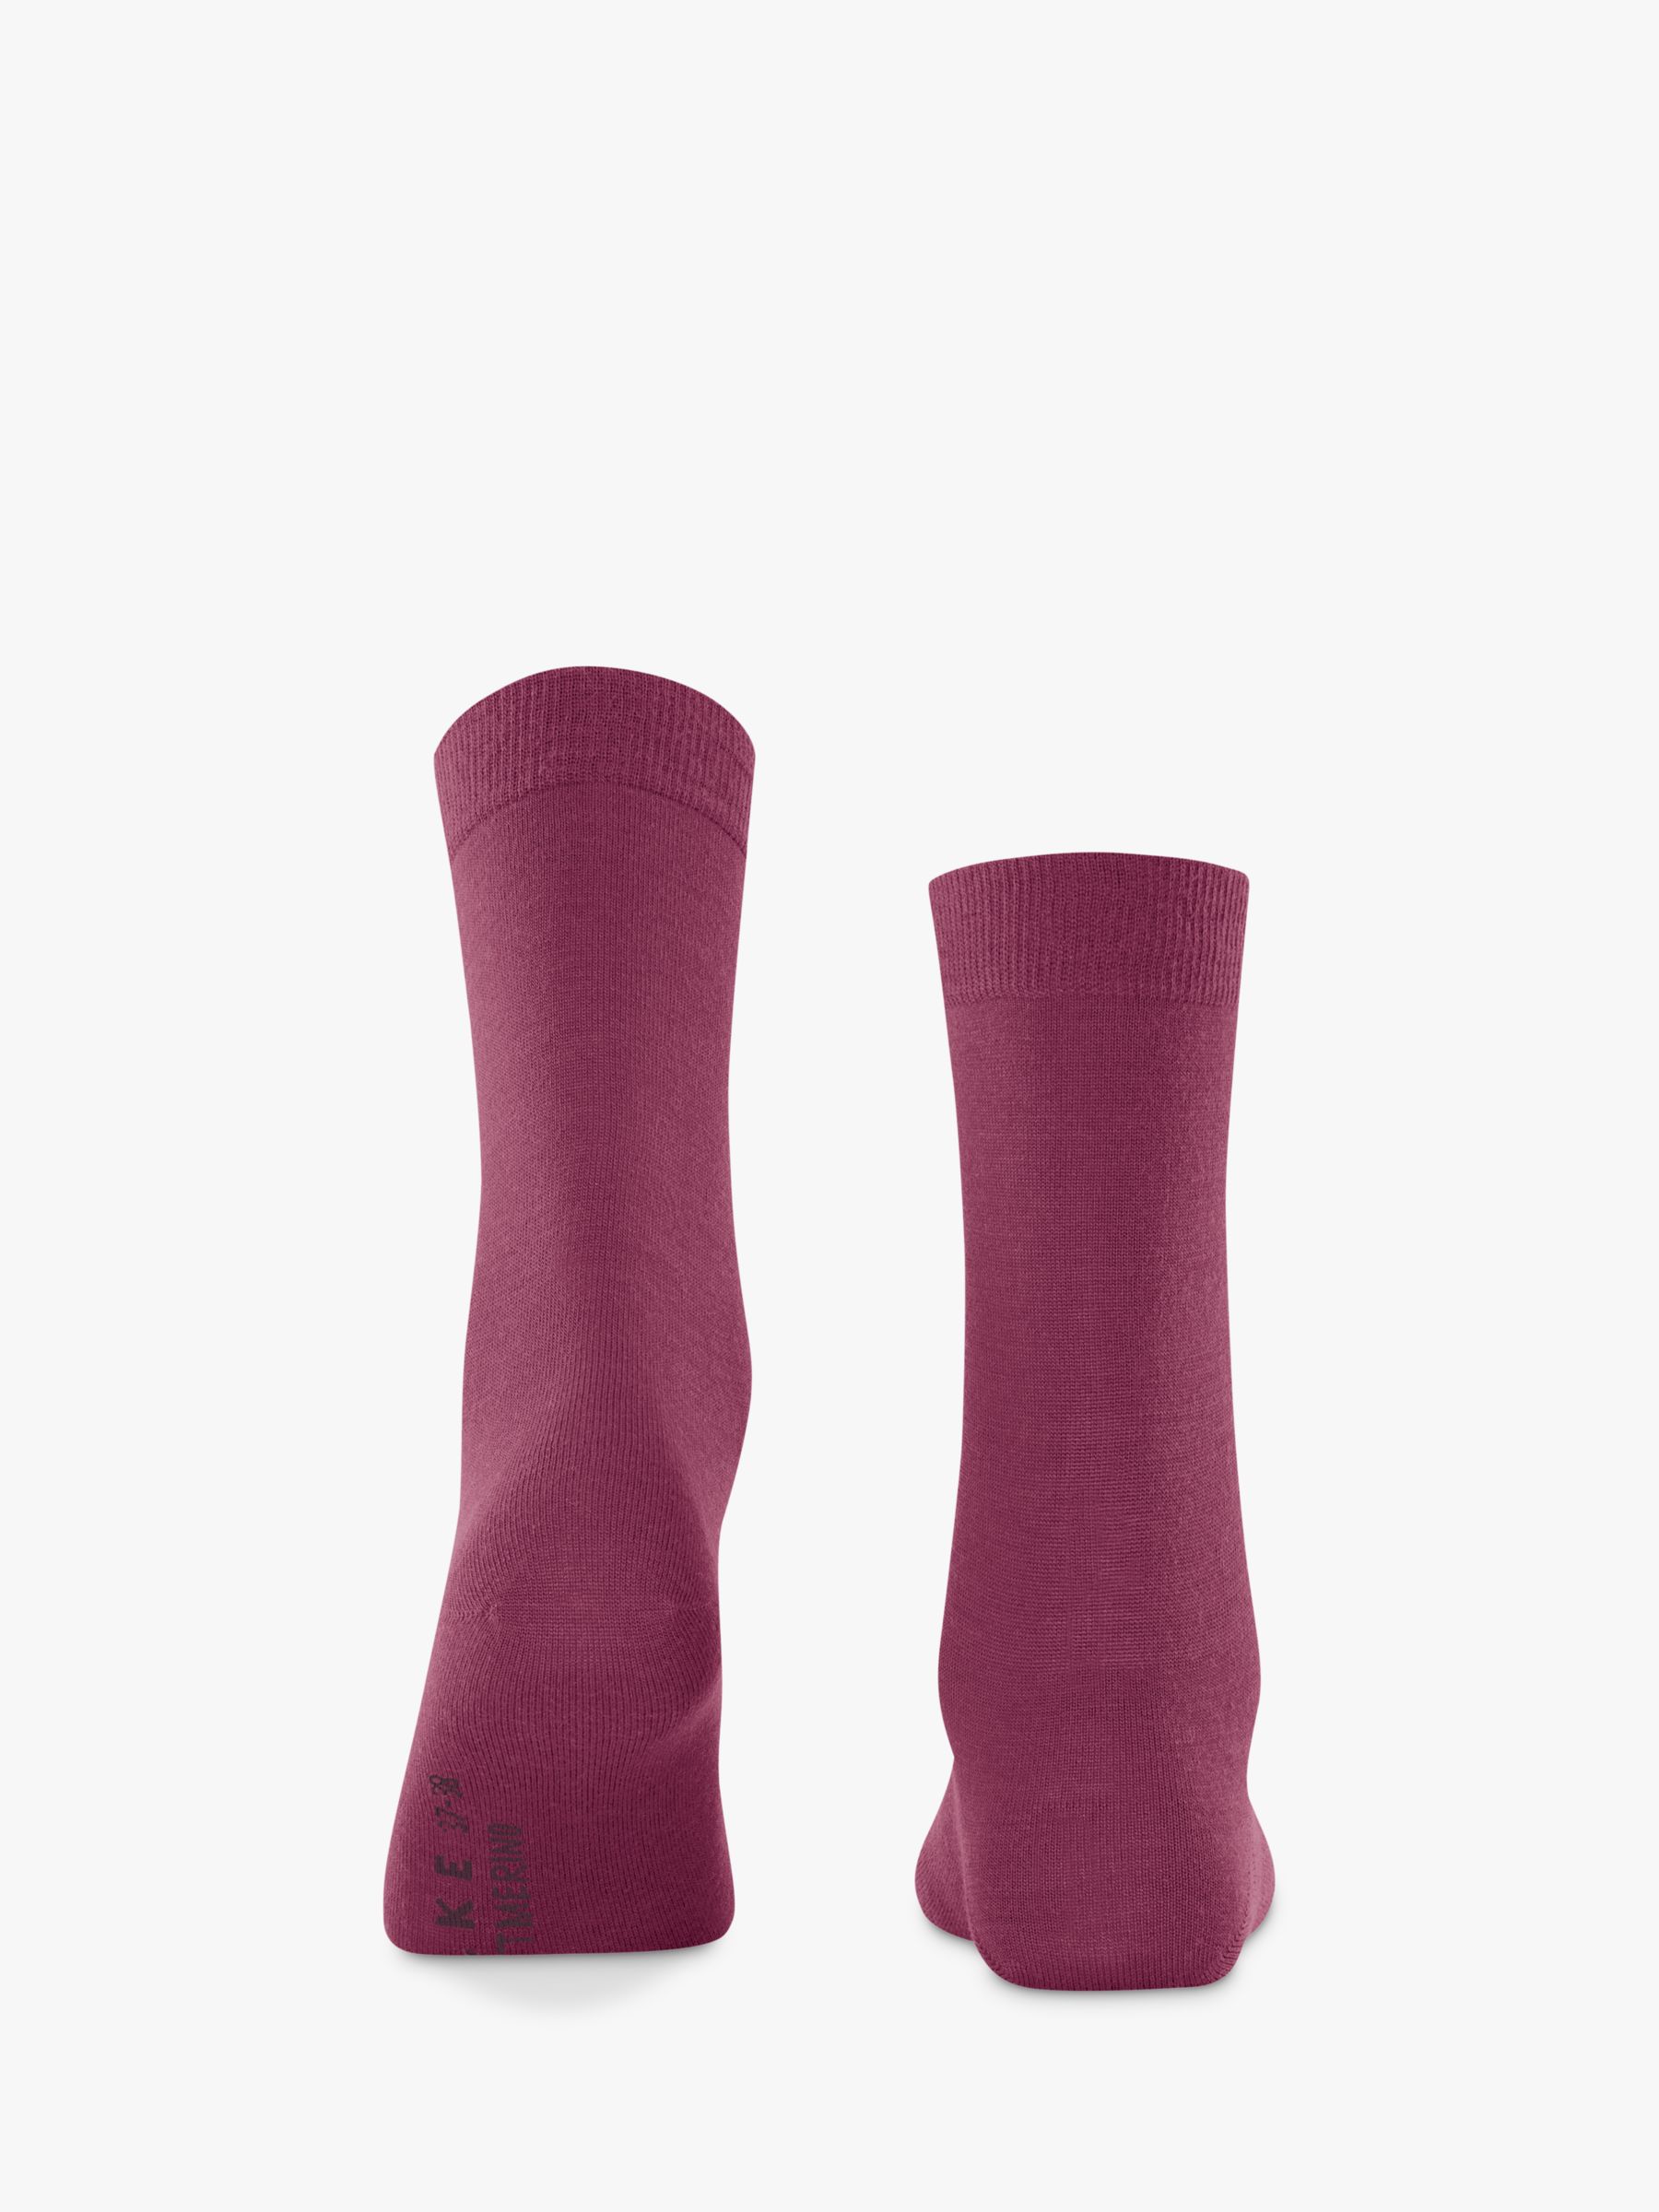 FALKE Soft Merino Wool Ankle Socks, 8236 Red Plum at John Lewis & Partners